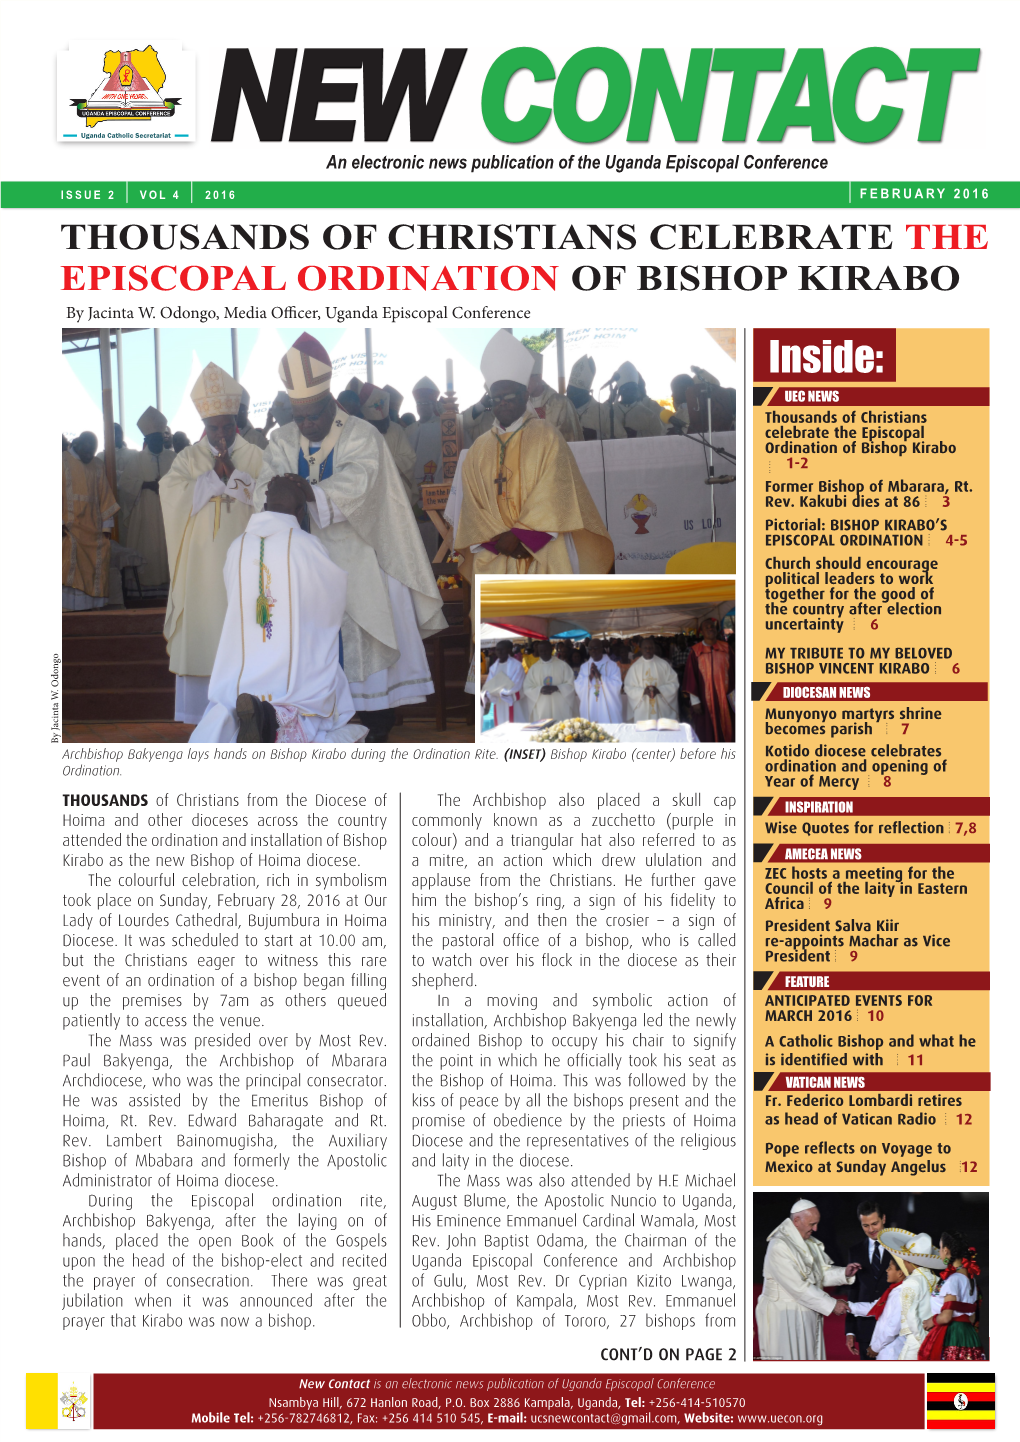 Inside: UEC NEWS Thousands of Christians Celebrate the Episcopal Ordination of Bishop Kirabo 1-2 Former Bishop of Mbarara, Rt